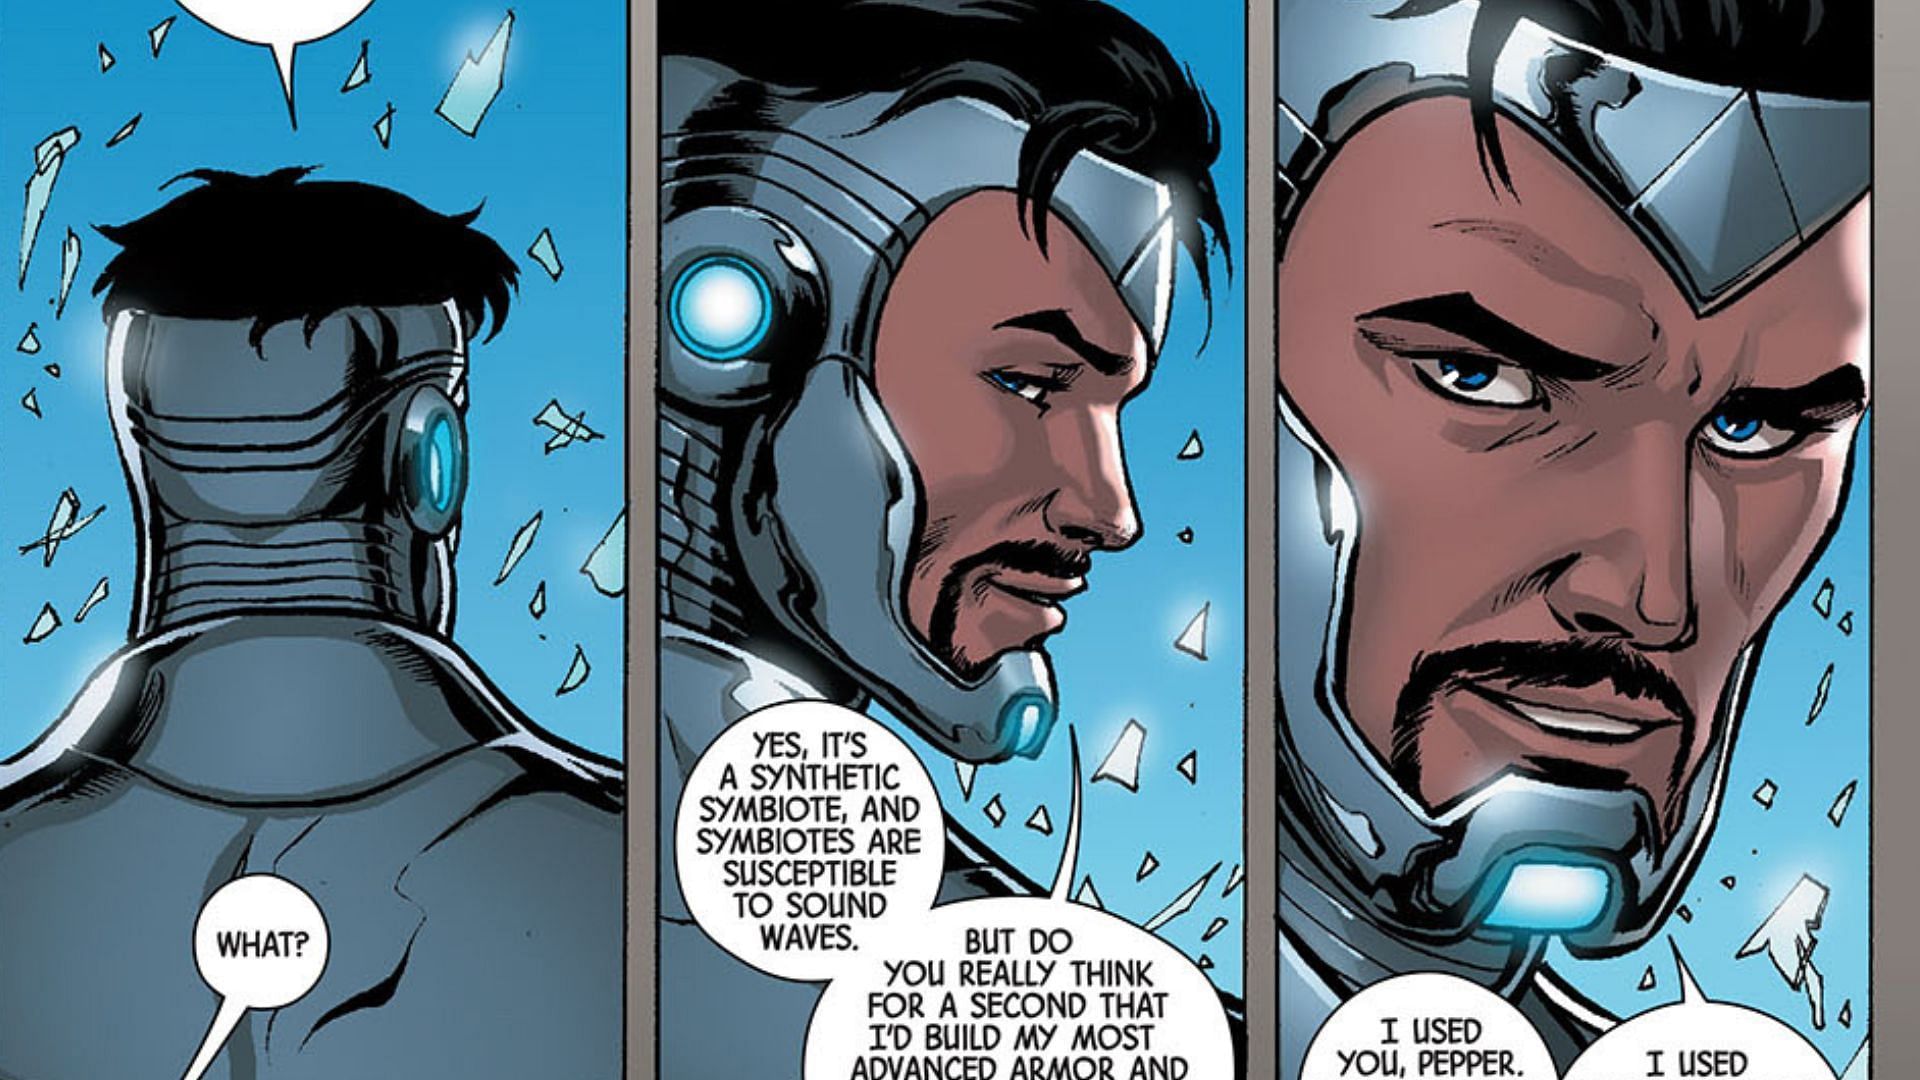 Superior Iron Man (Image via Marvel Comics)